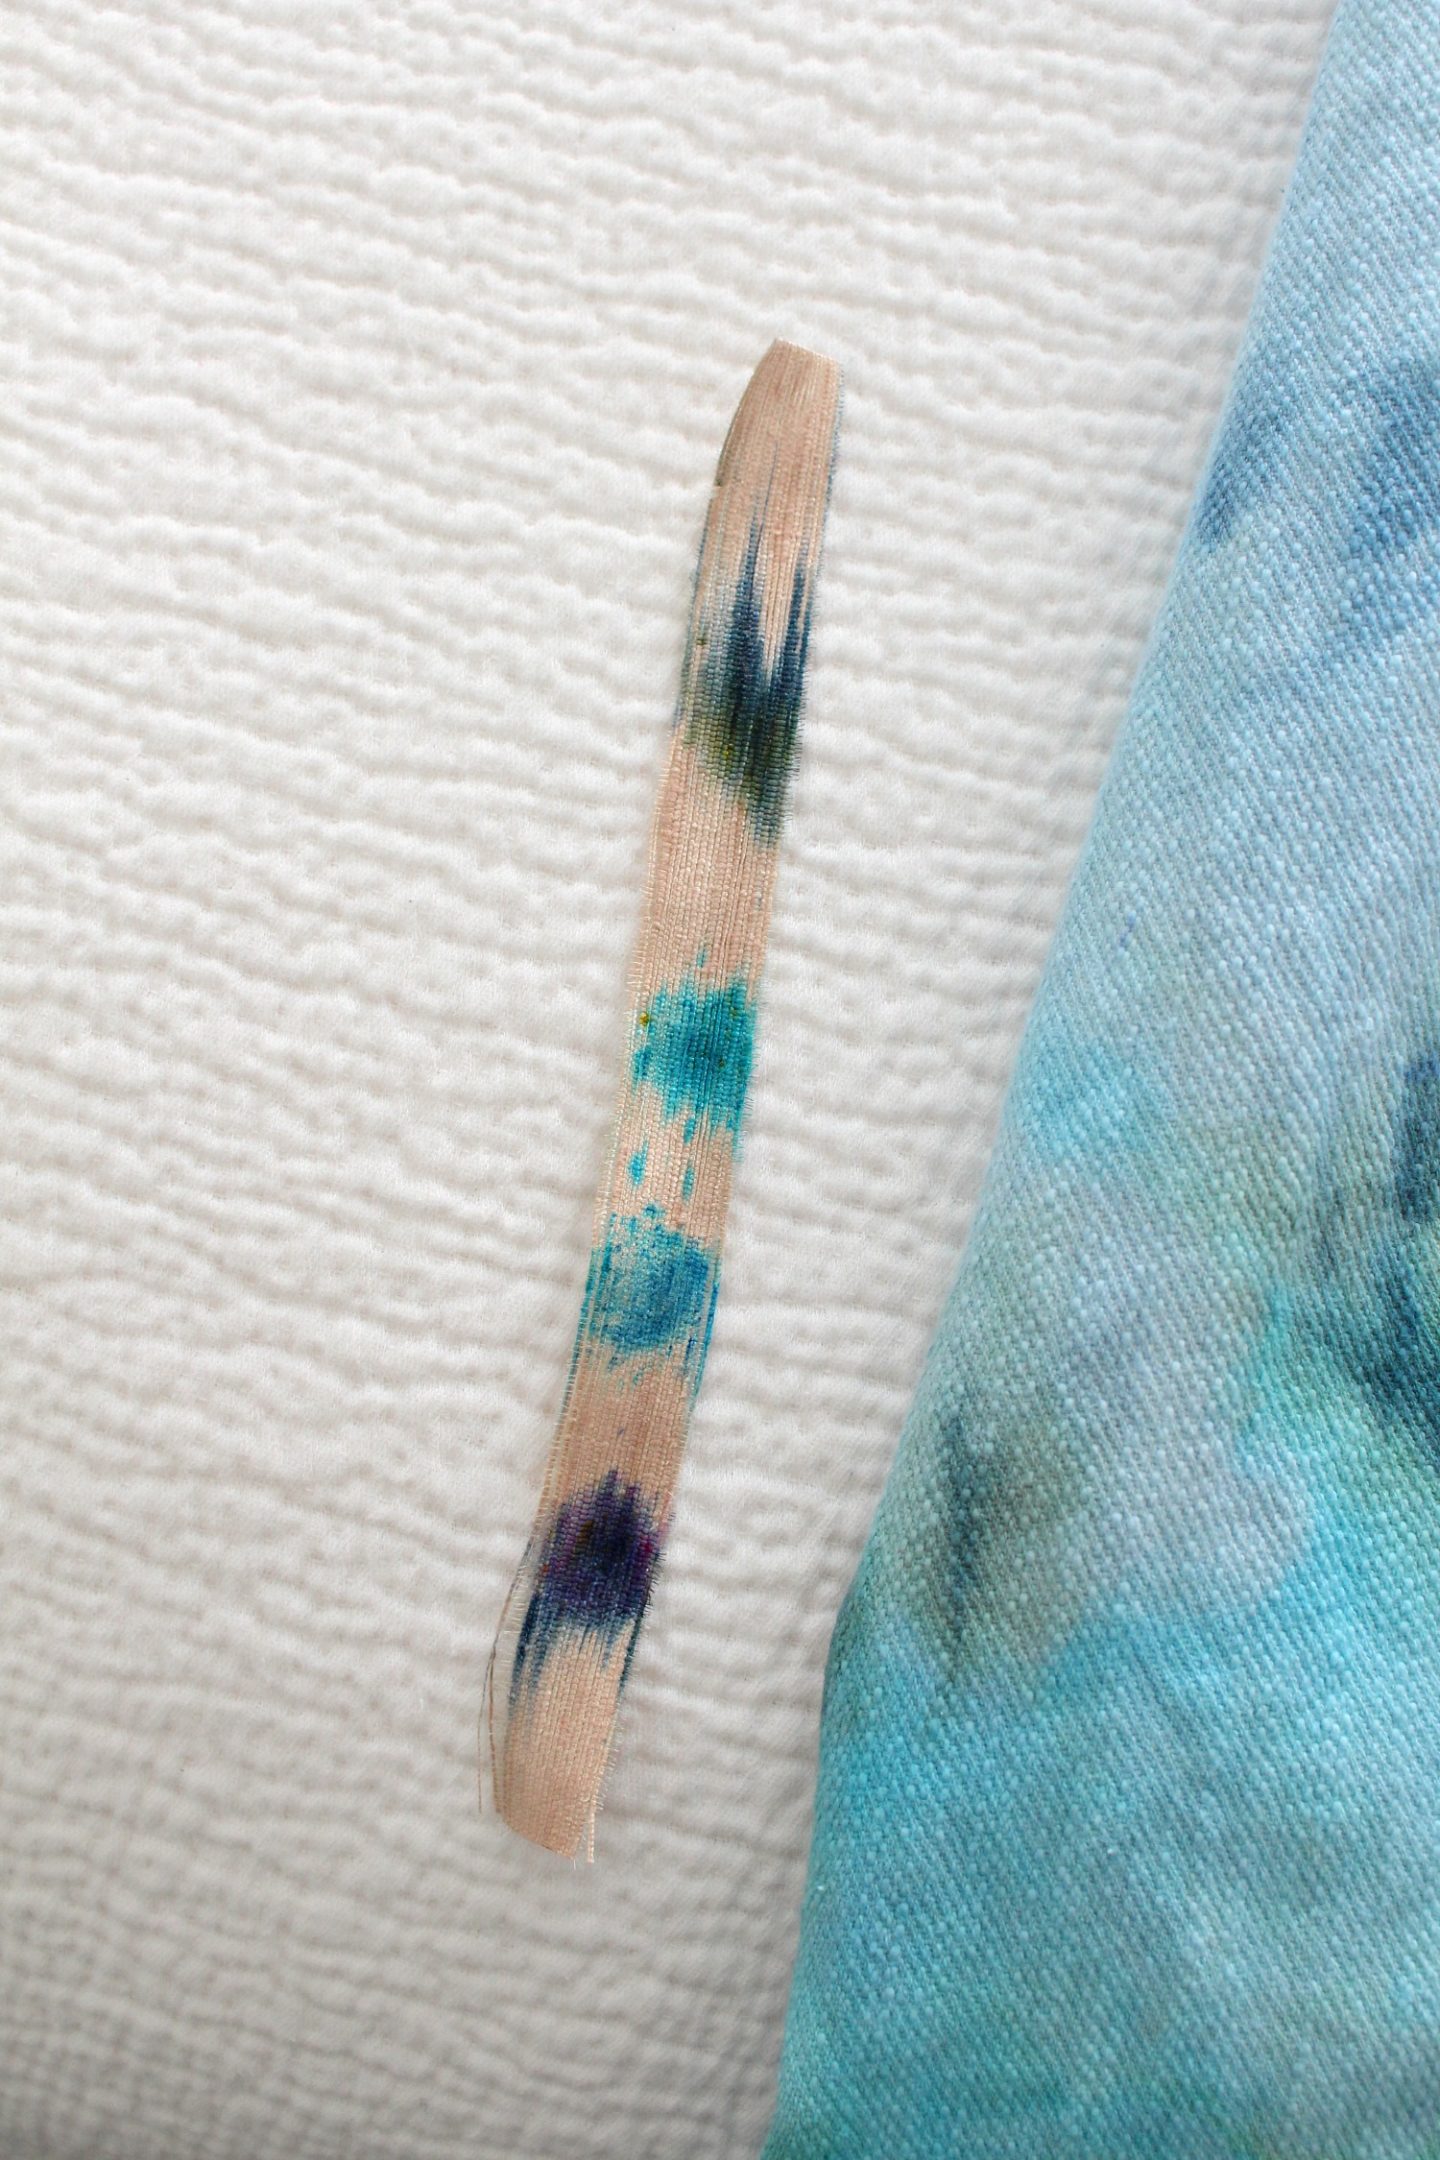 Procion Dyes on Silk